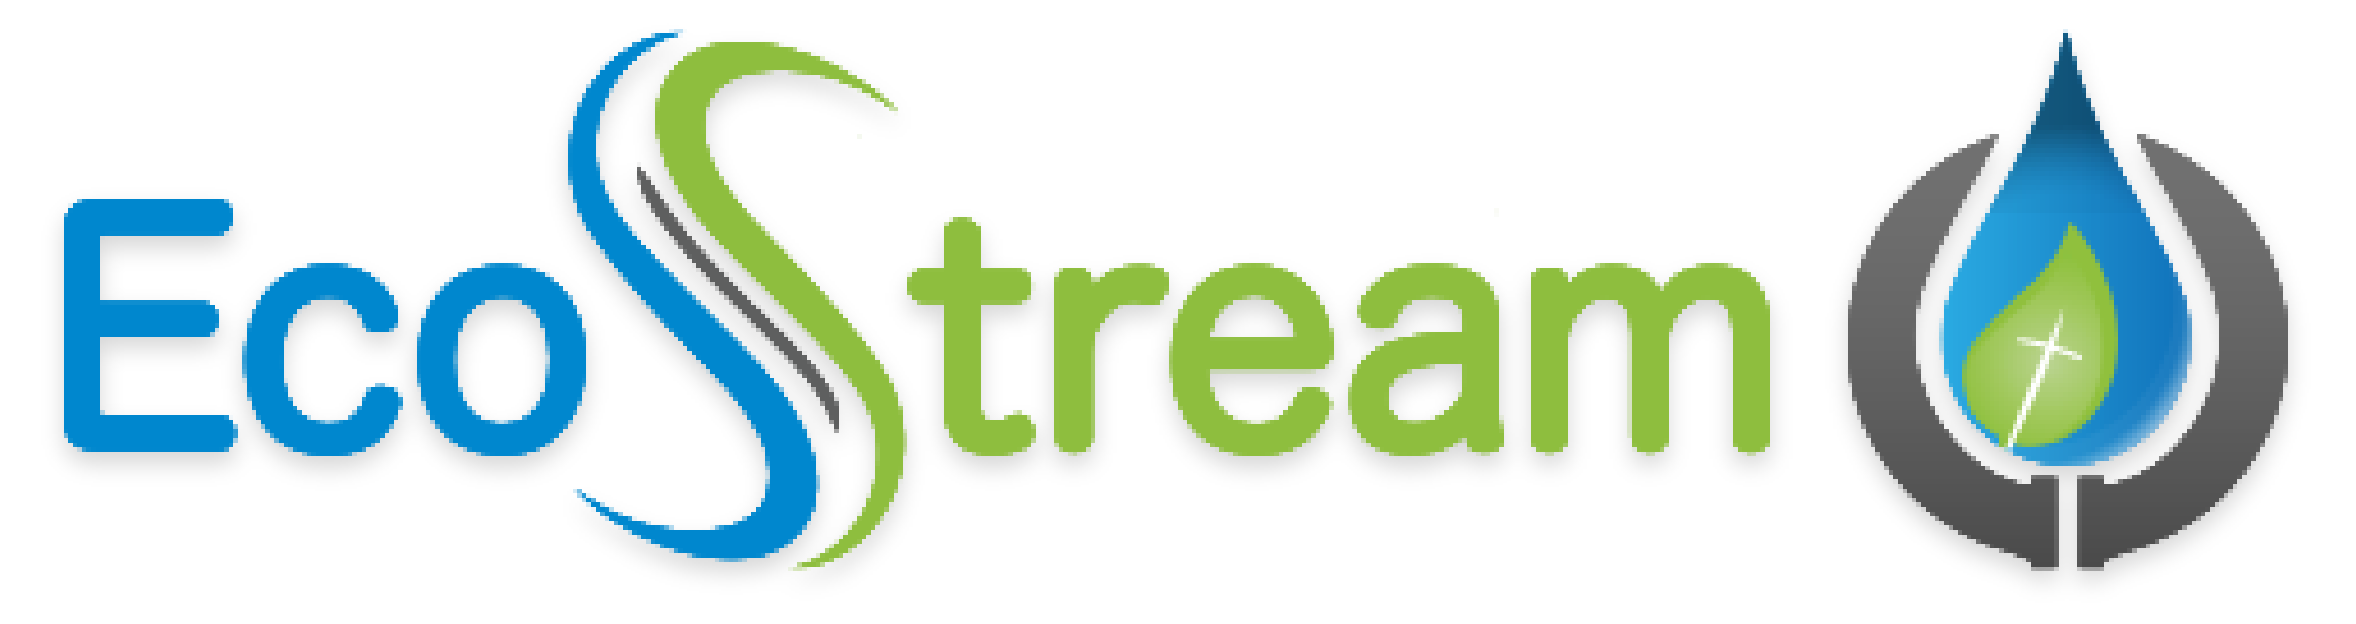 EcoStream USA logo